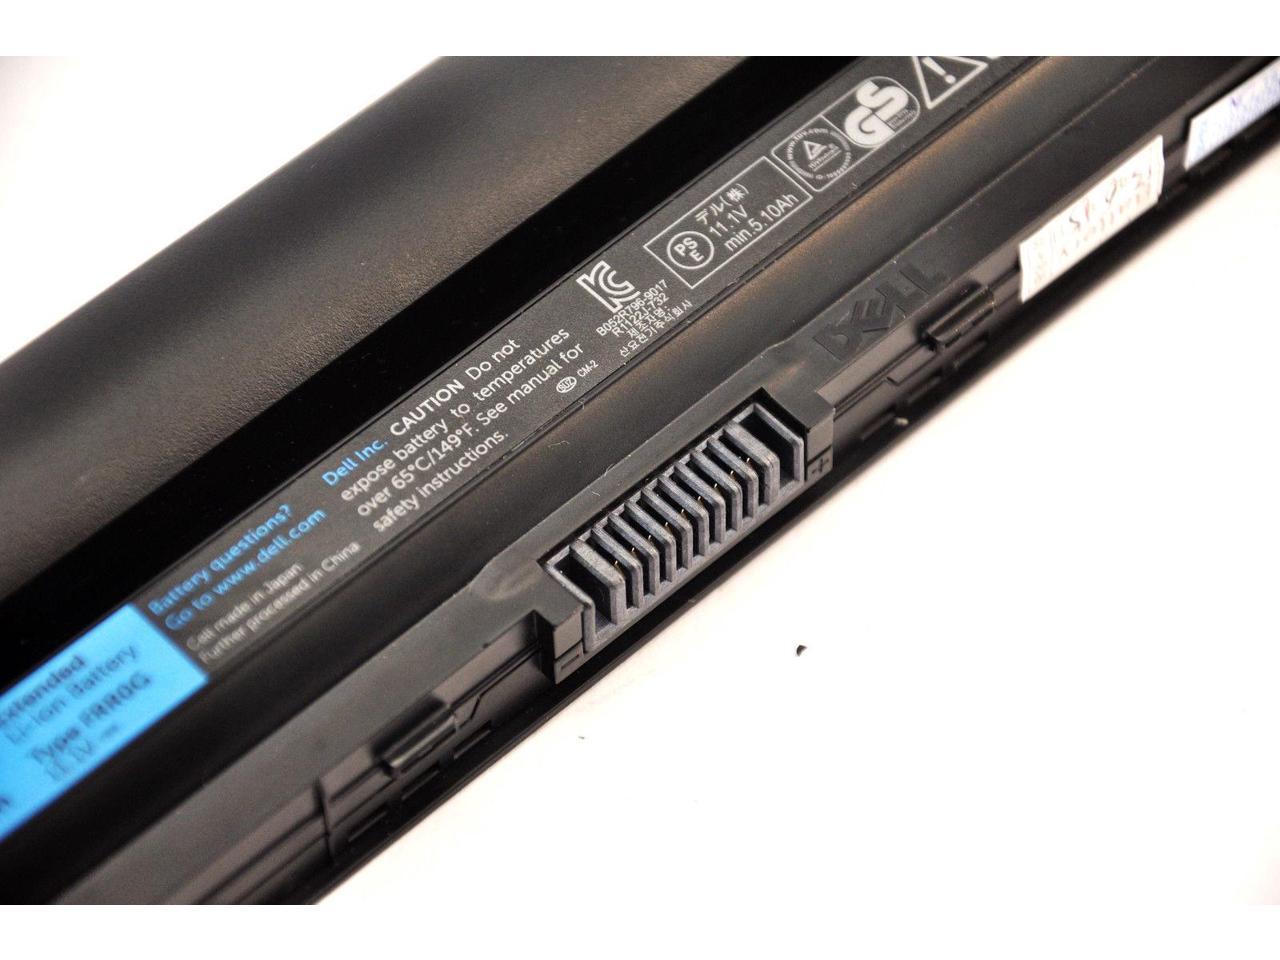 FRR0G Laptop Battery compatible with Dell Latitude E6120 E6220 E6230 E6320 E6430s Notebook